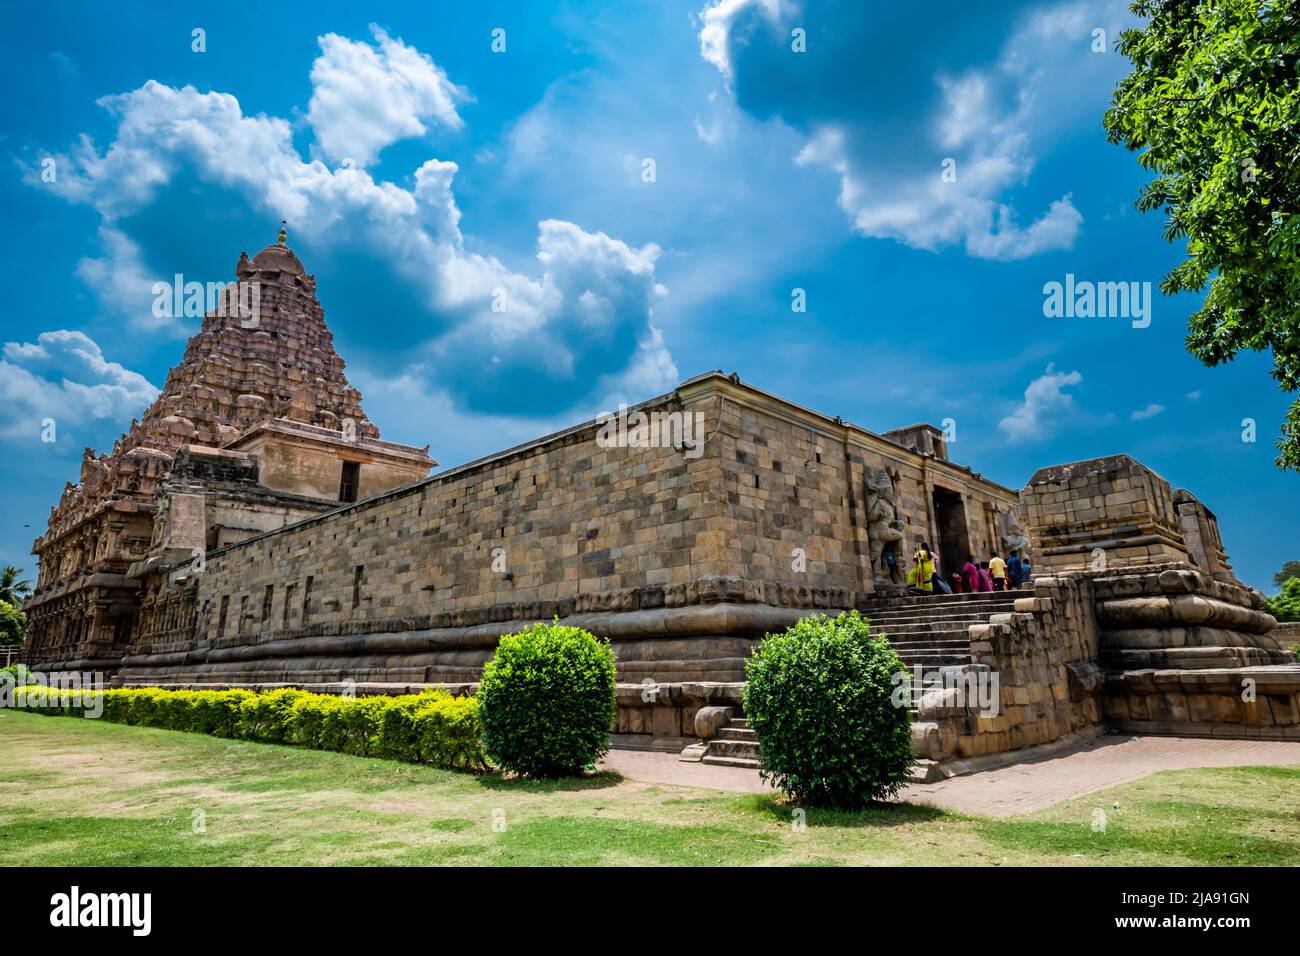 Indian Temple. Great Hindu architecture in Gangaikonda Chola Puram temple, South India. Stock Photo